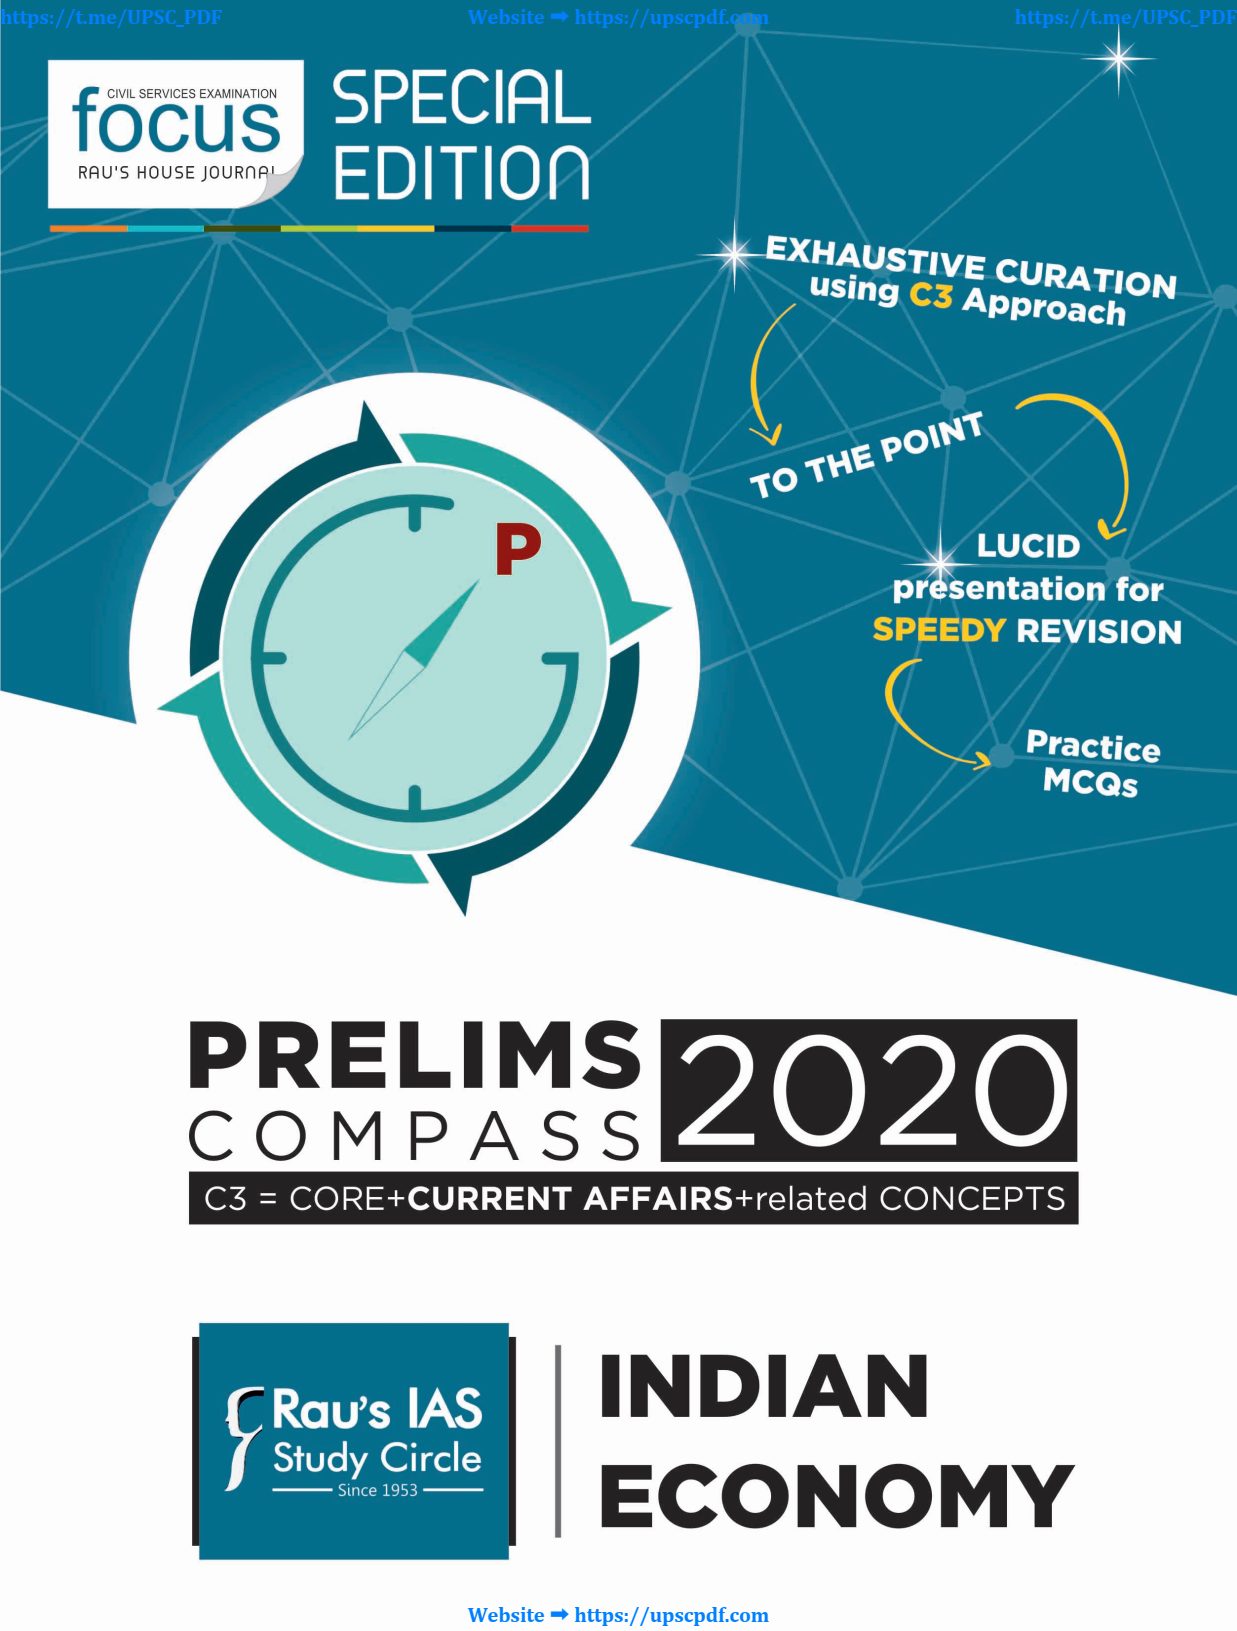 Raus IAS Prelims Compass 2020 Economy PDF